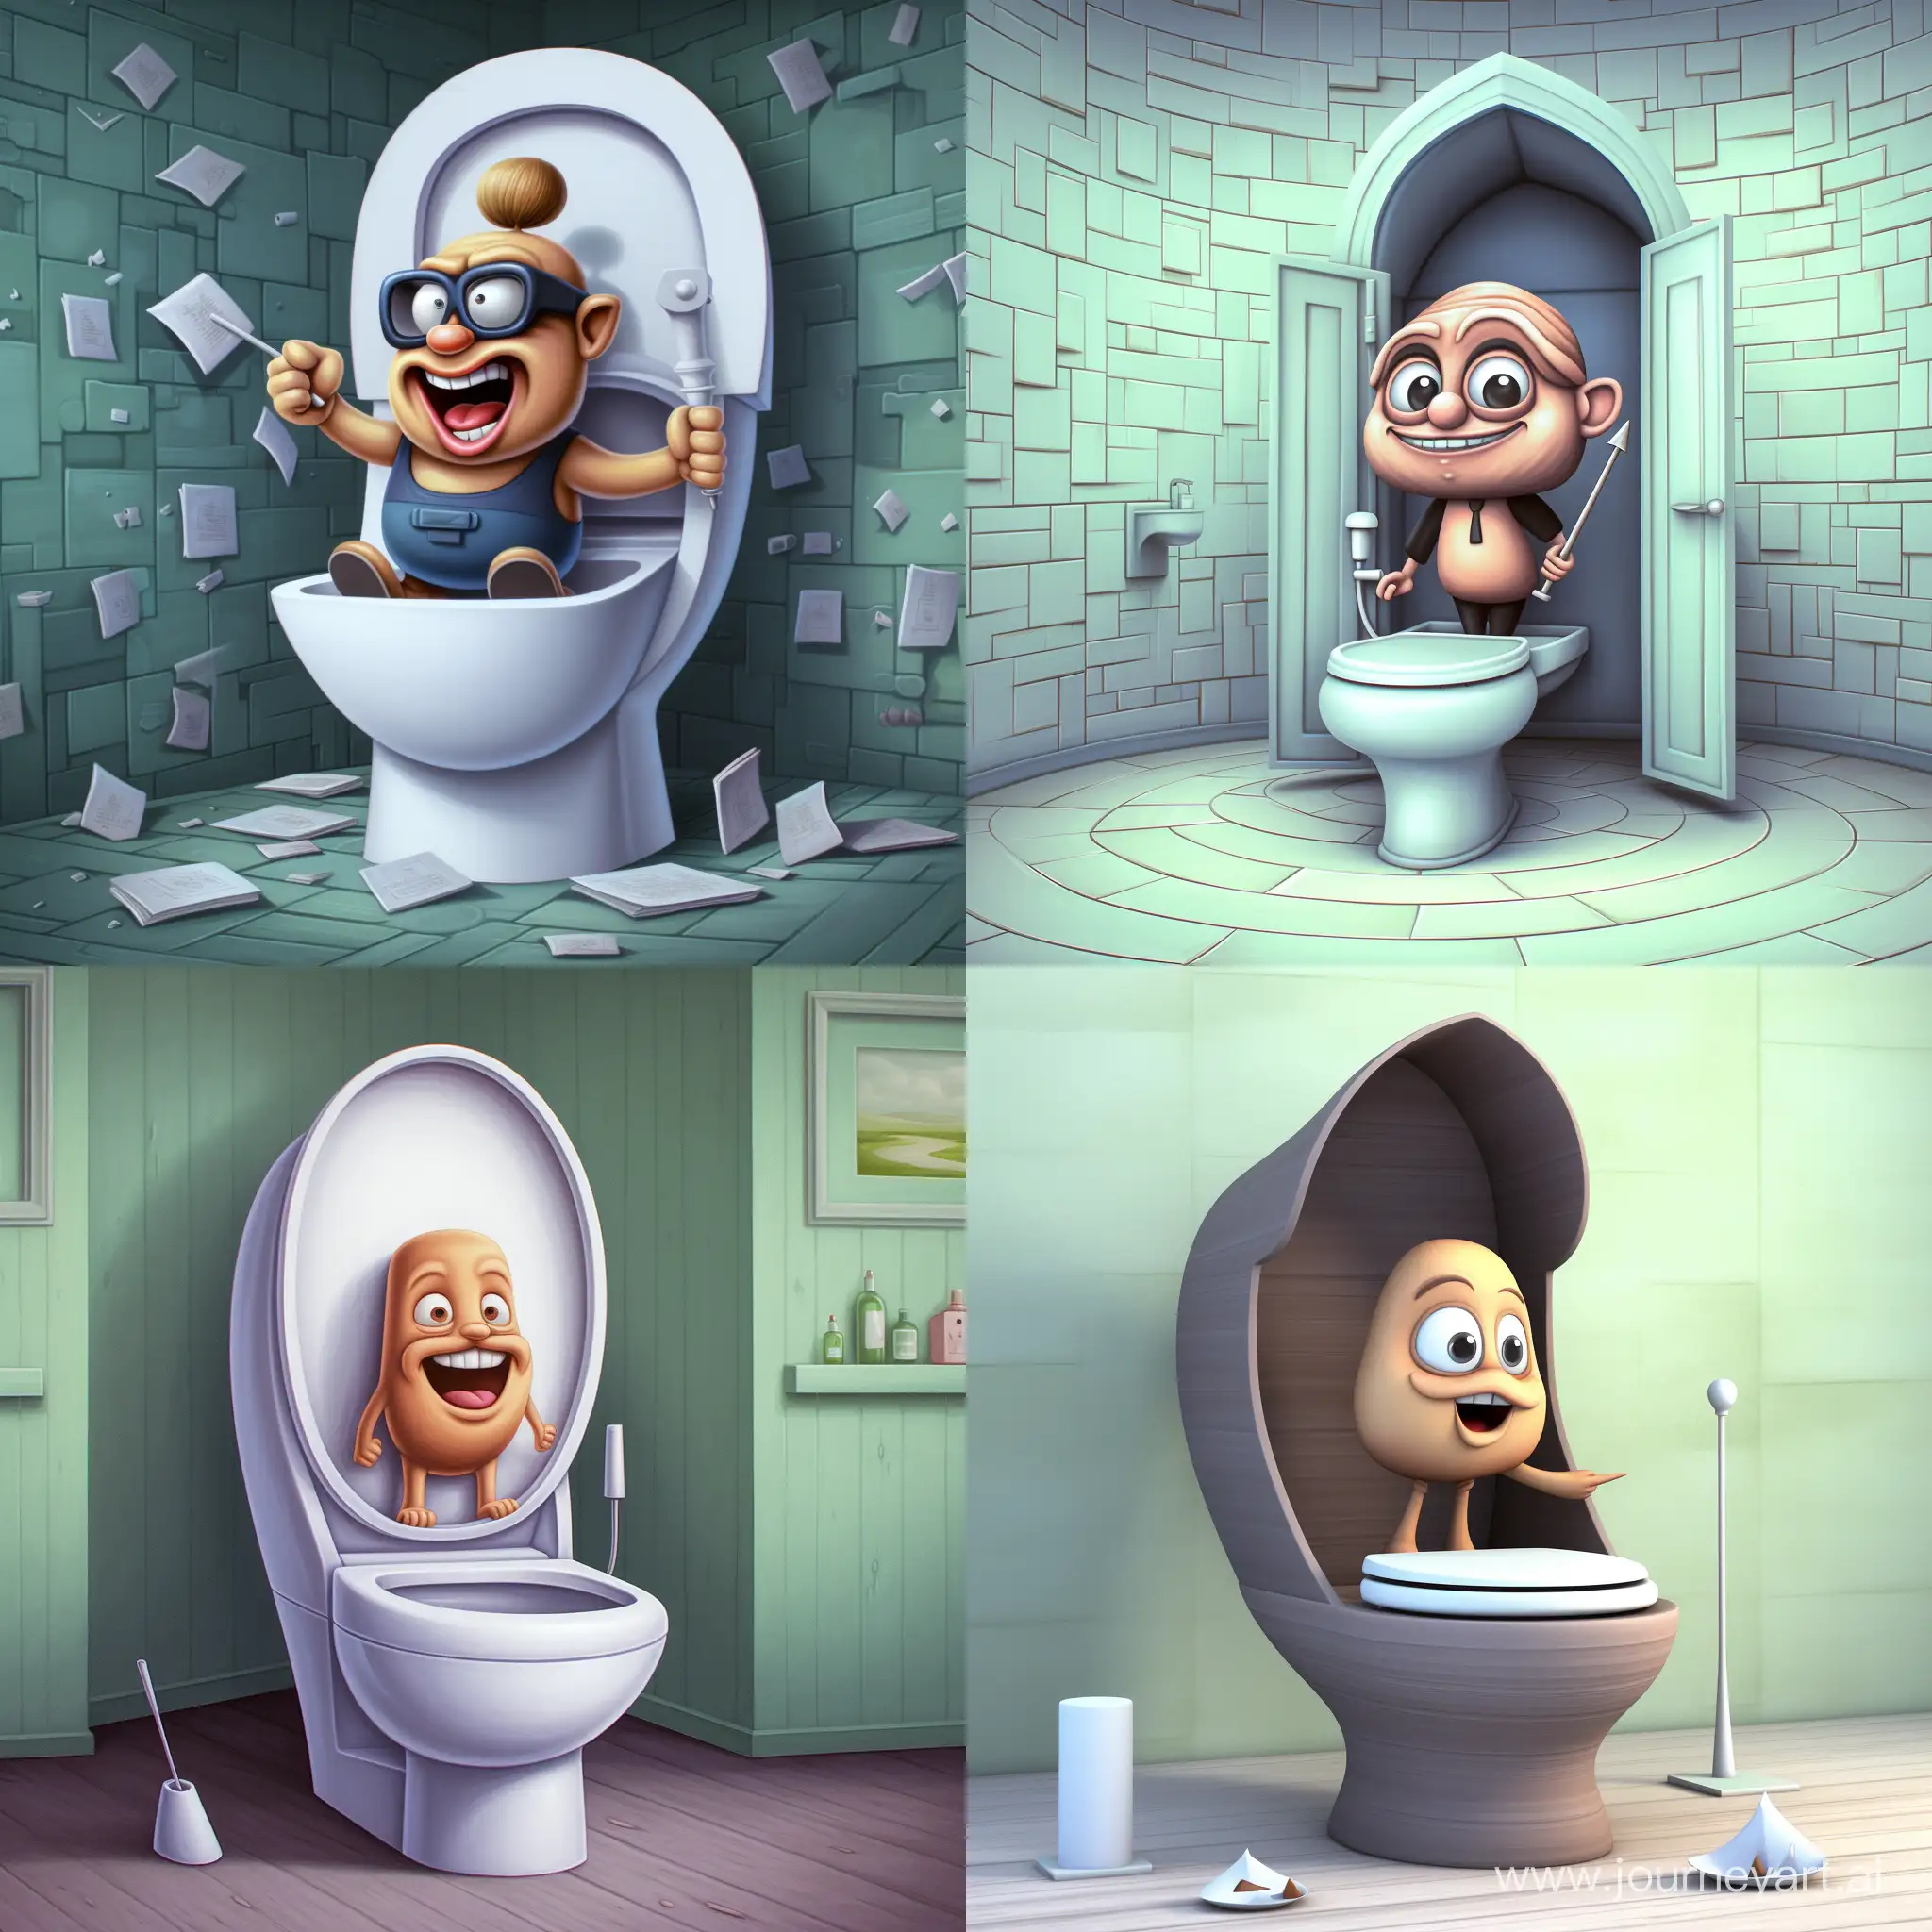 Spongebob on toilet 
